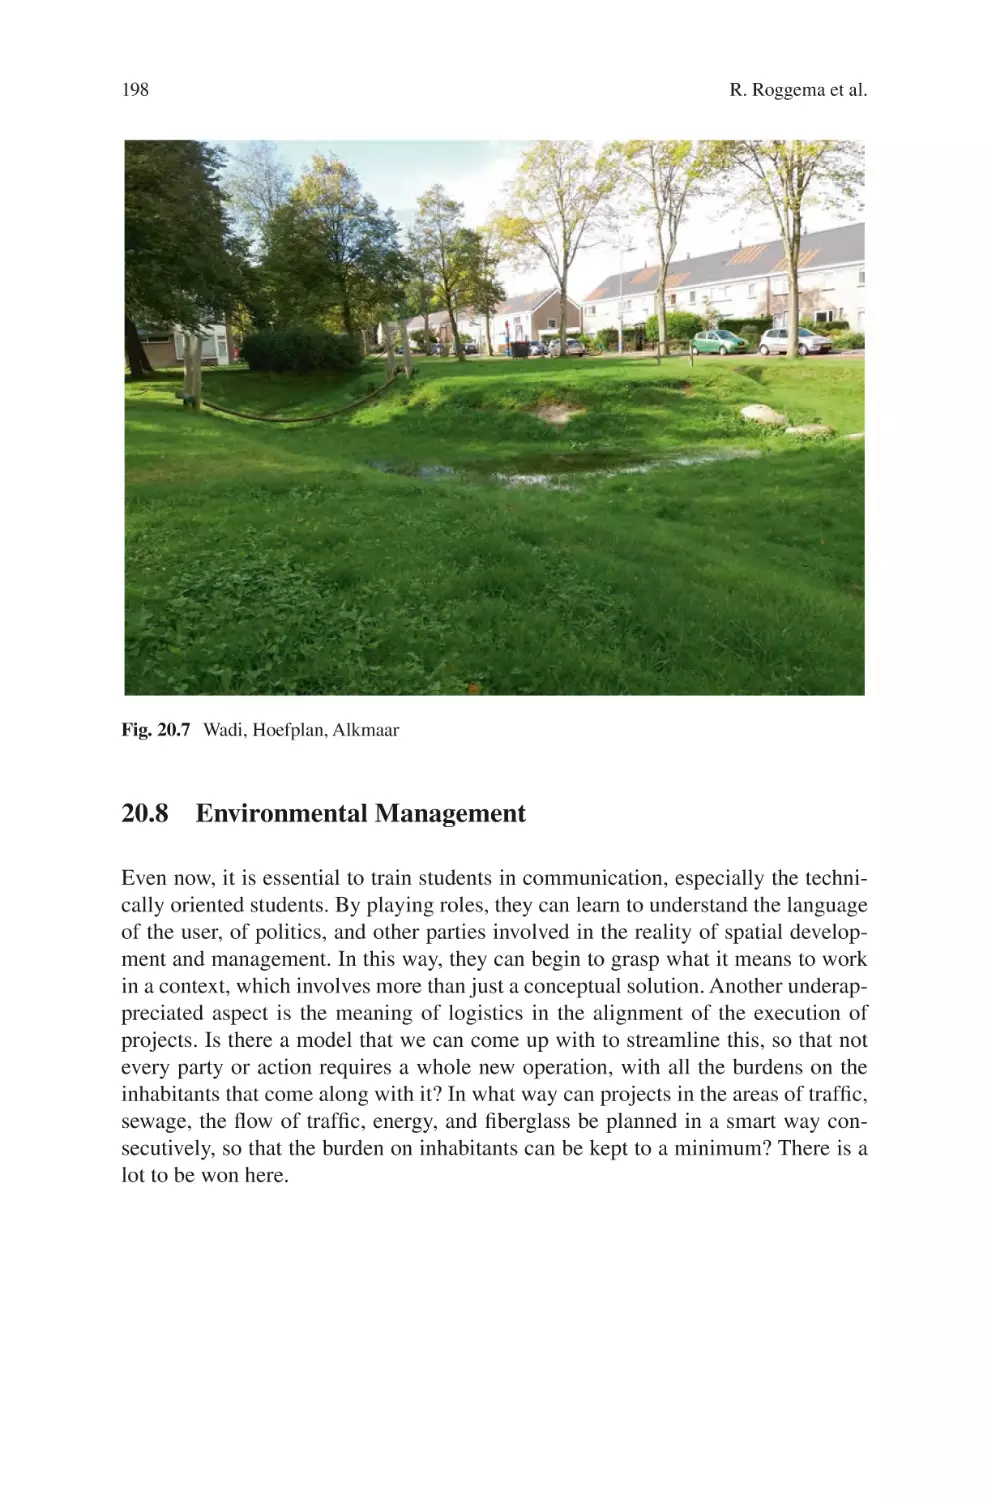 20.8 Environmental Management